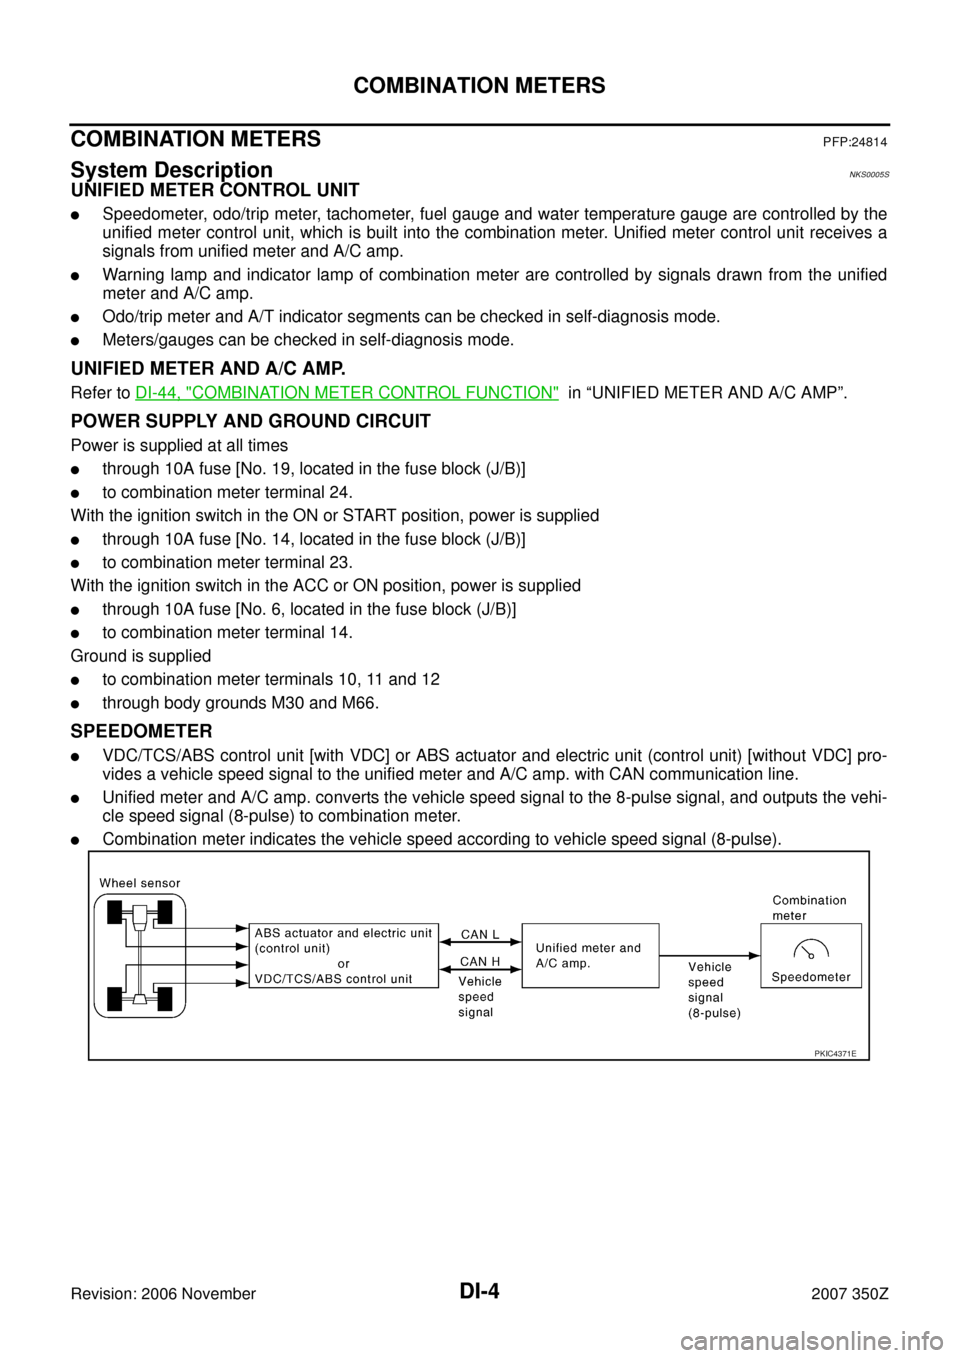 NISSAN 350Z 2007 Z33 Driver Information Manual DI-4
COMBINATION METERS
Revision: 2006 November2007 350Z
COMBINATION METERSPFP:24814
System DescriptionNKS0005S
UNIFIED METER CONTROL UNIT
Speedometer, odo/trip meter, tachometer, fuel gauge and wate